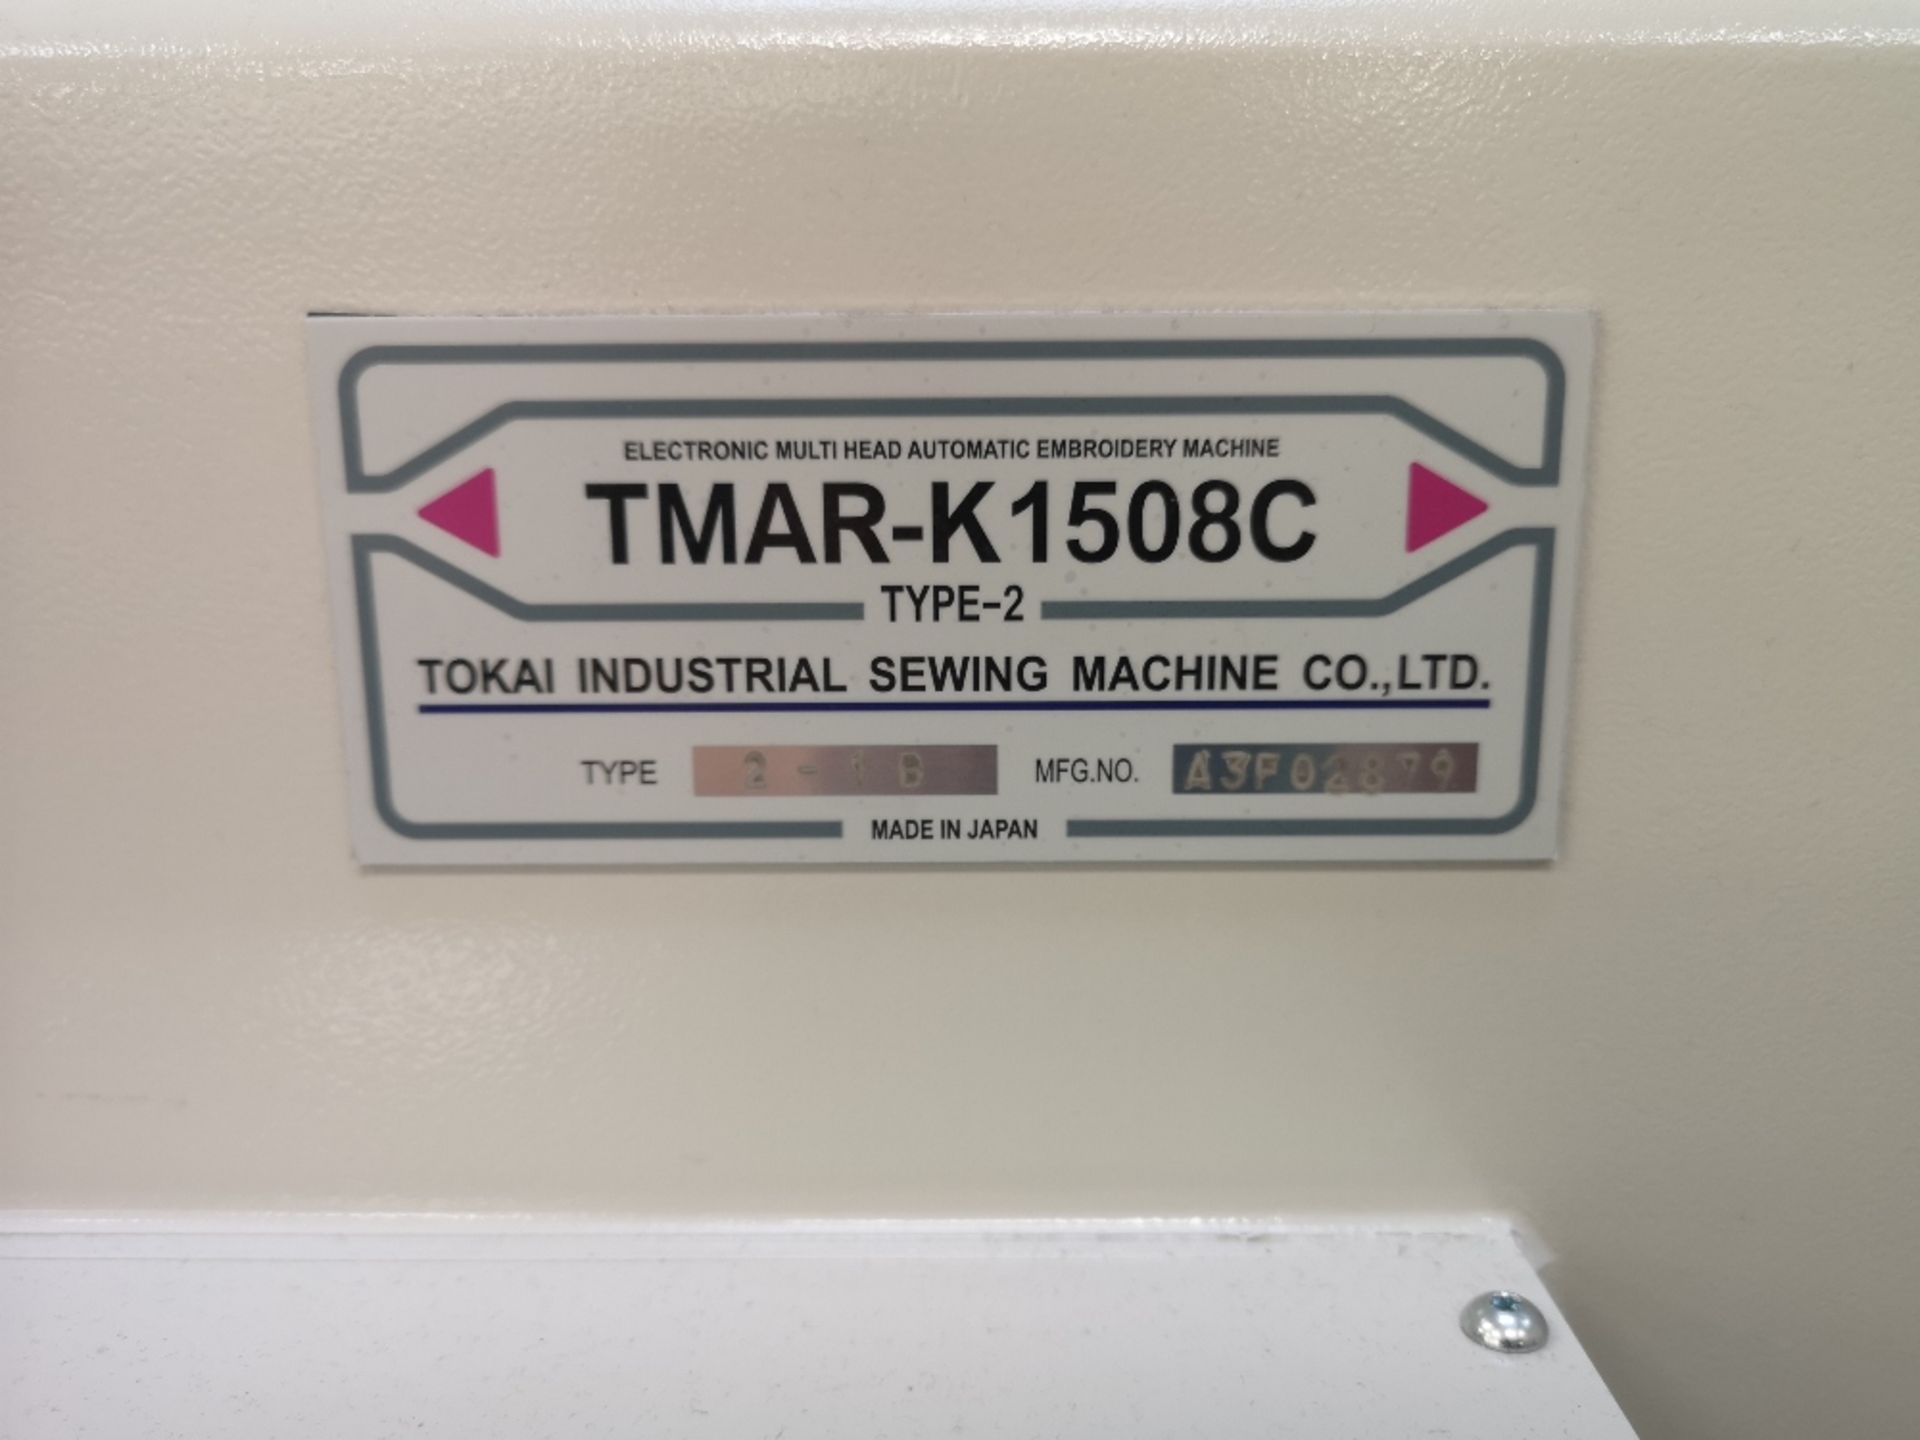 Tajima TMAR-K1508C Electronic Multi Head Automatic Embroidery Machine (2018) - Image 4 of 6